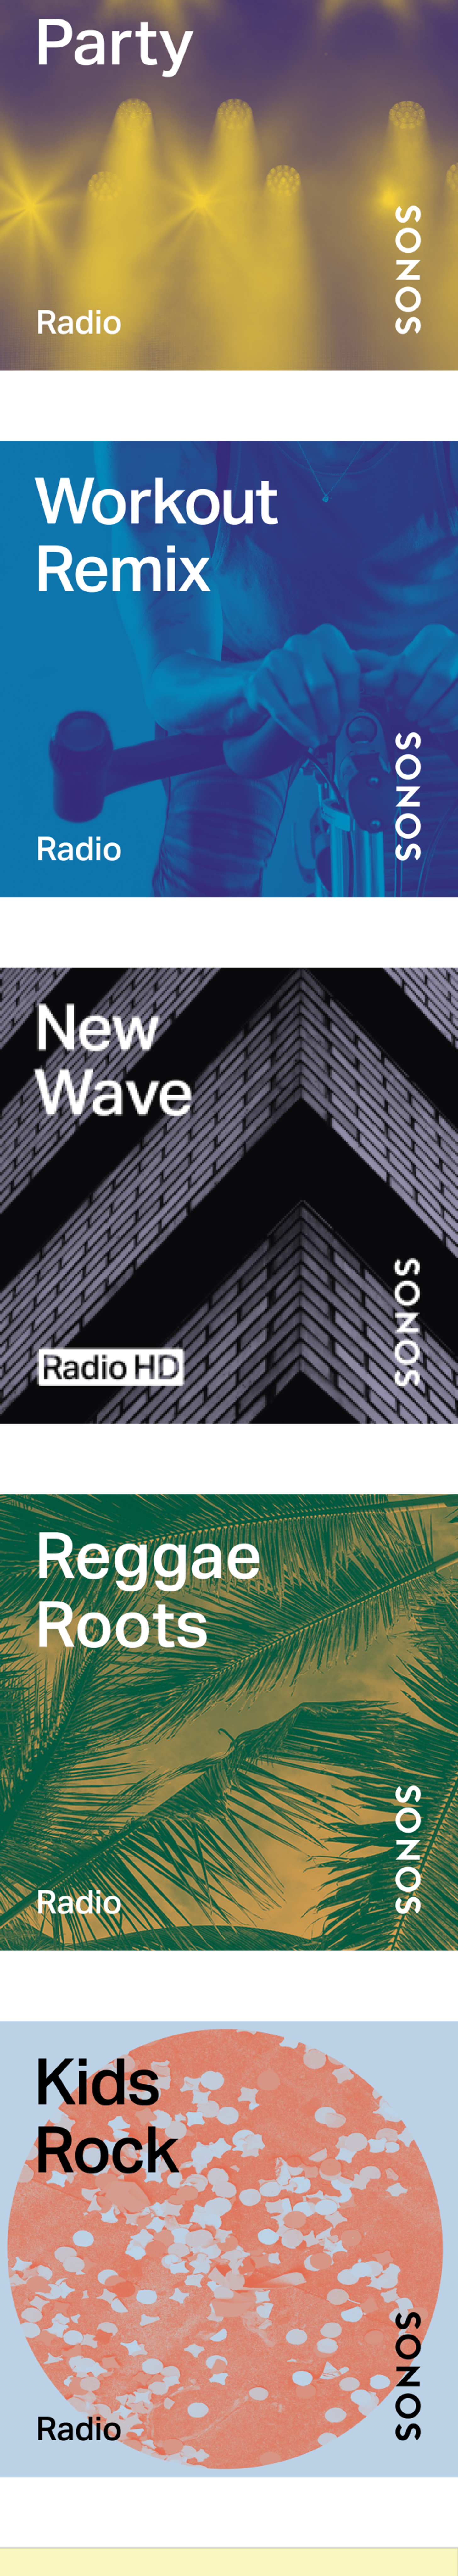 Sonos Radio stations